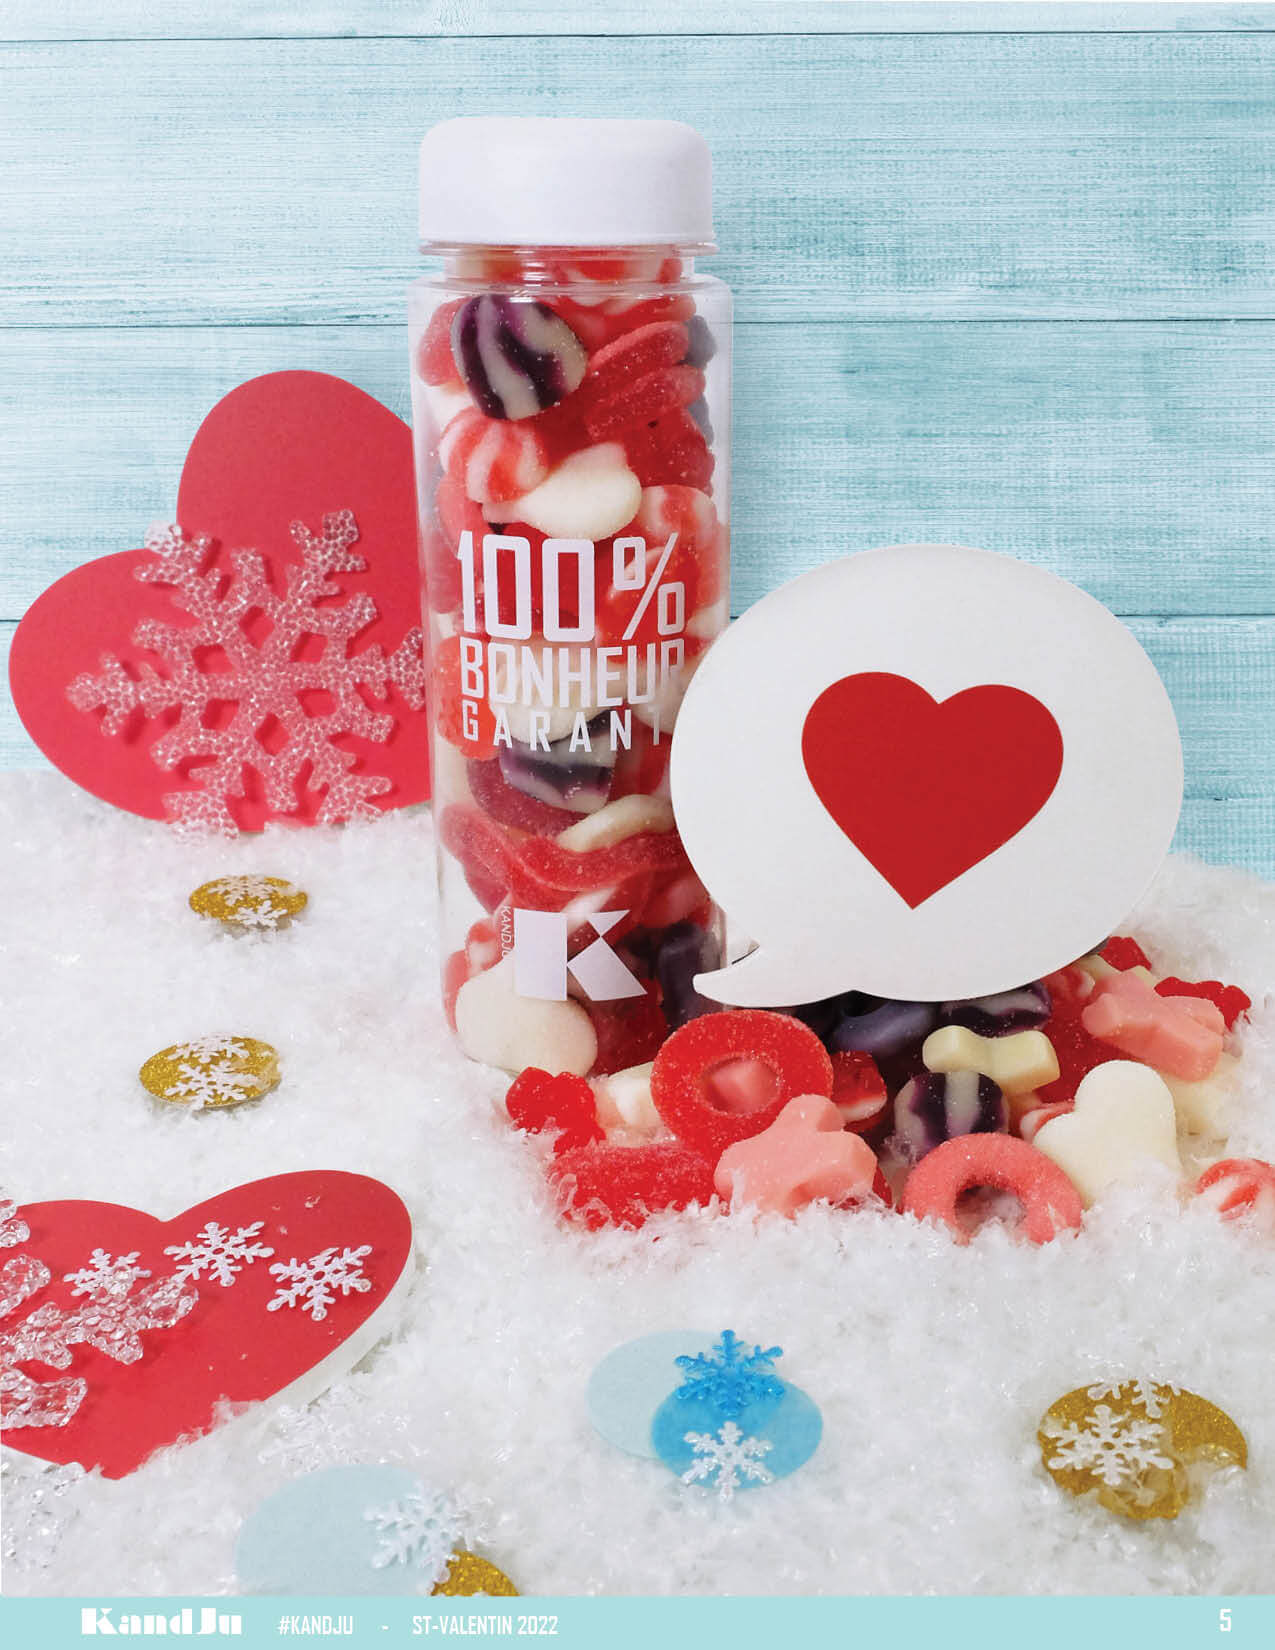 Bonbons Saint-Valentin : Commandez vos bonbons St-Valentin en ligne